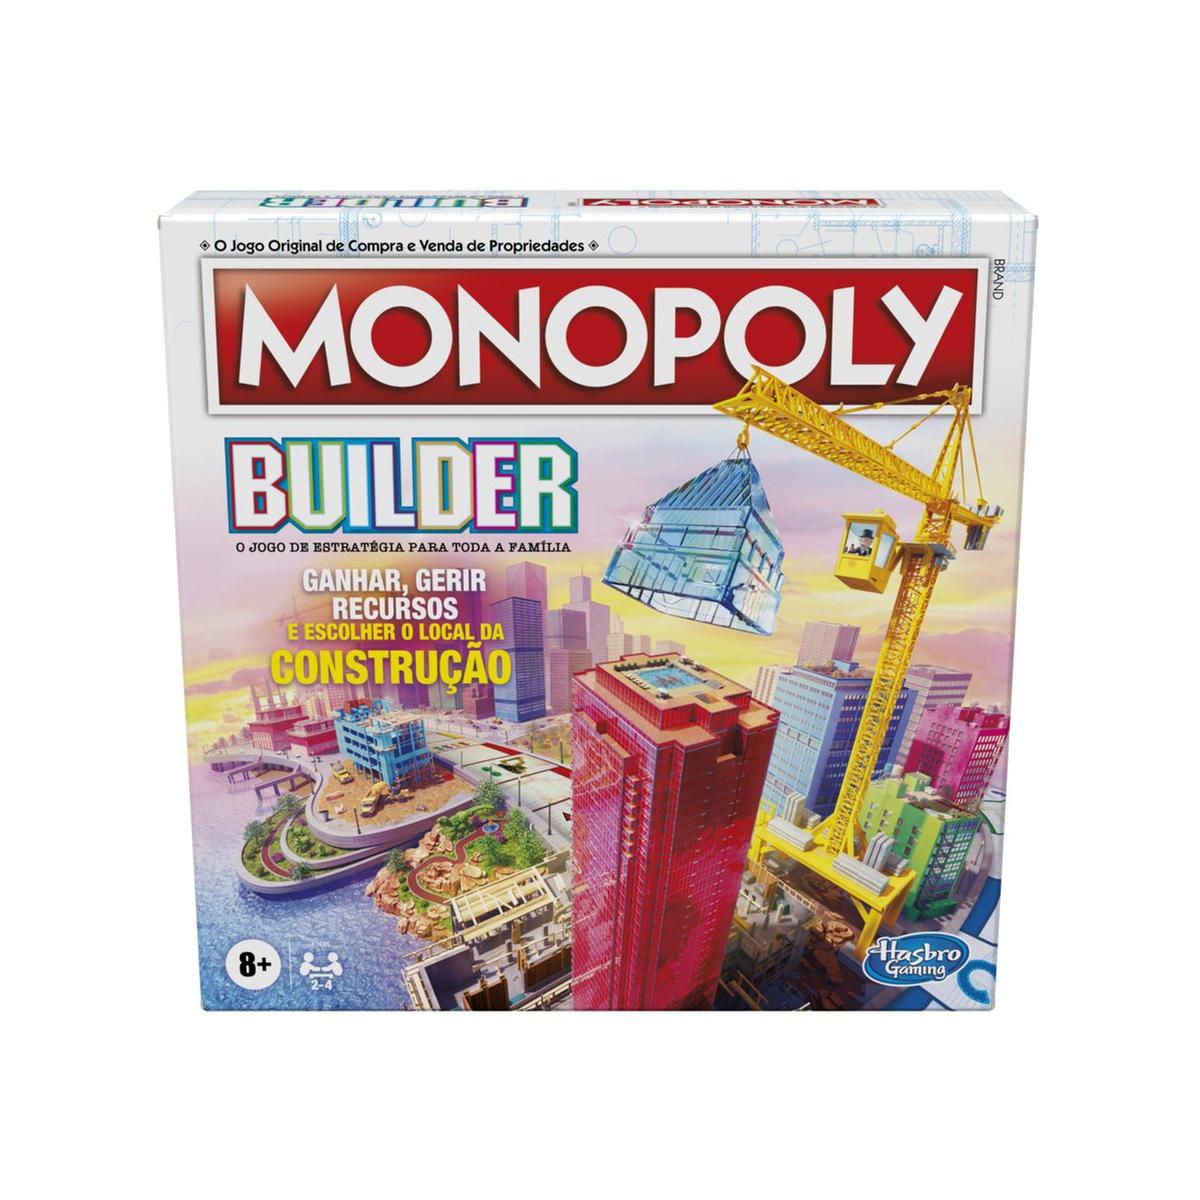 Monopoly - Builder, MONOPOLY